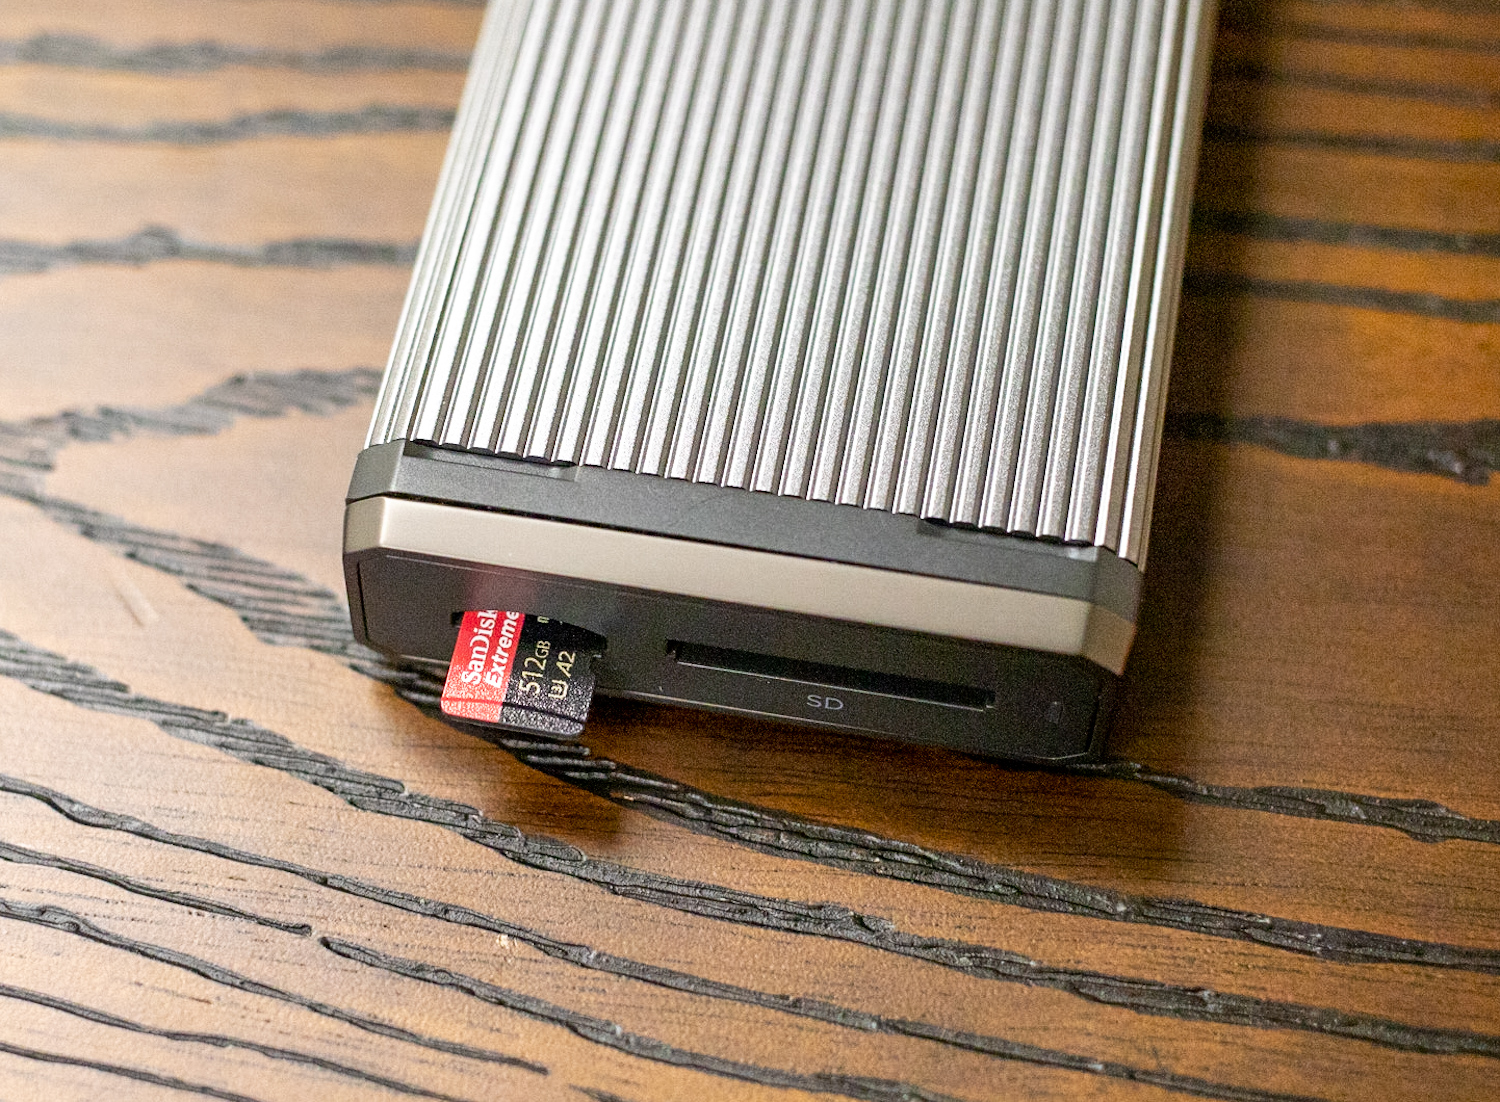 Carte microSD SanDisk Extreme 256Go + Adaptateur SD - Flying Eye